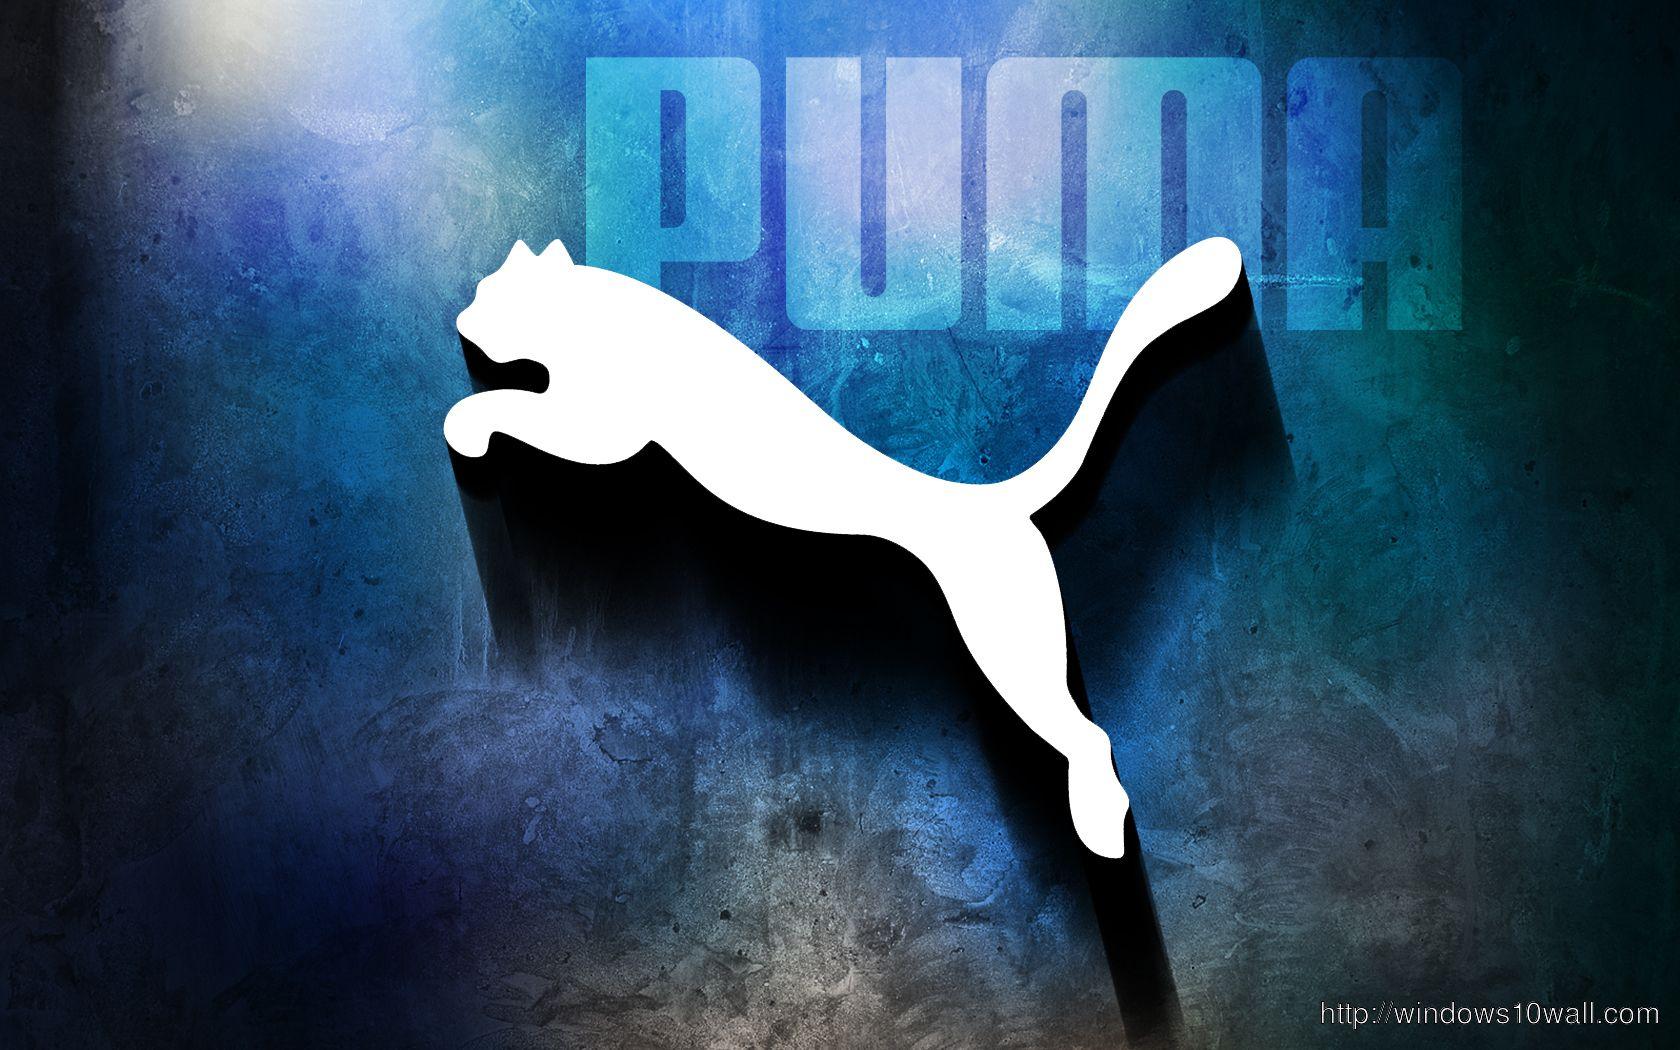 Puma Logo Wallpapers Top Free Puma Logo Backgrounds Wallpaperaccess